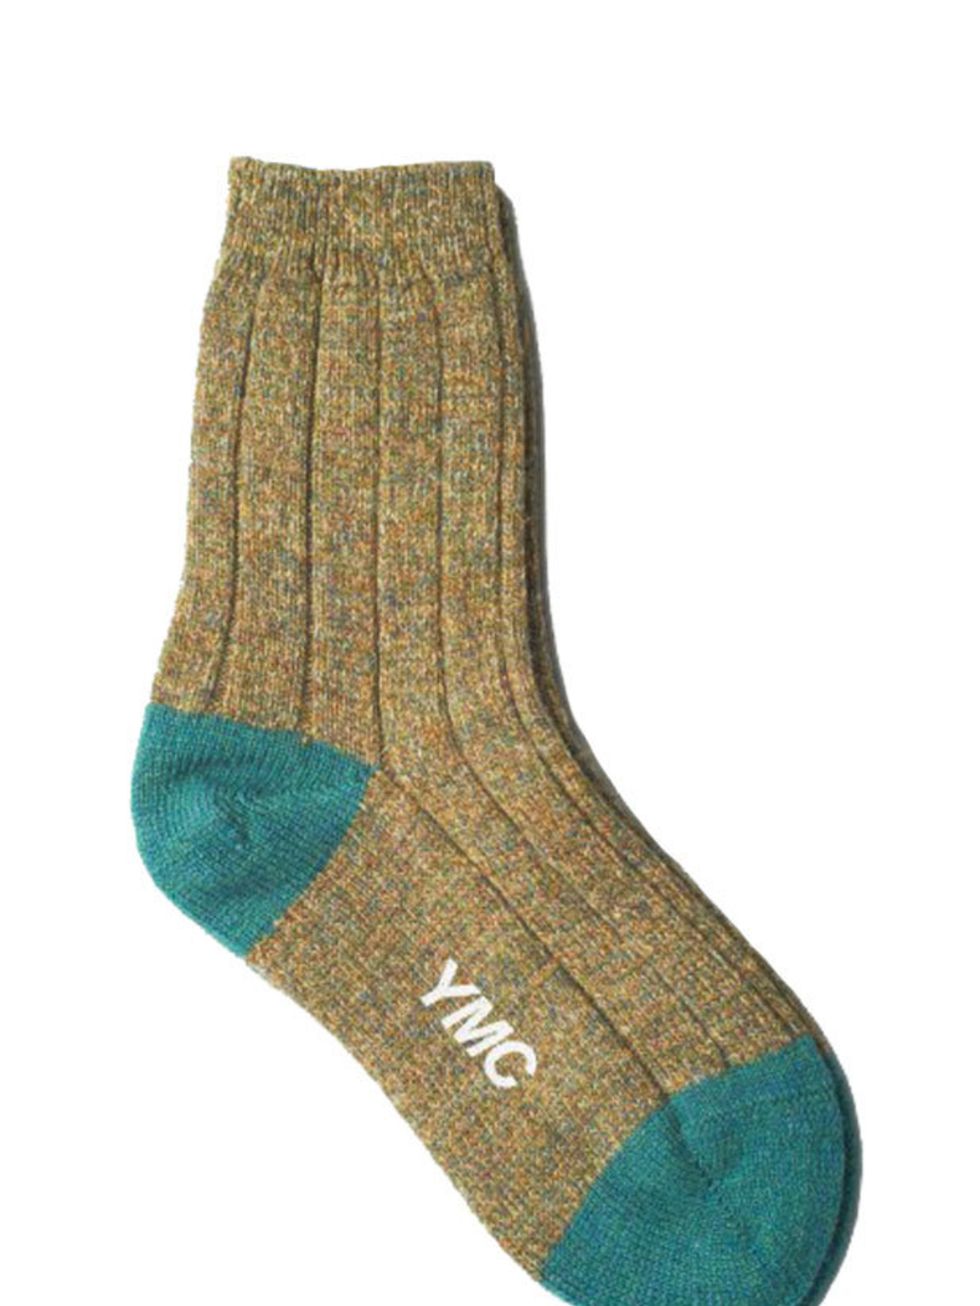 <p>YMC x Scott Nichol tow-tone hand finished socks, £12, at <a href="http://www.youmustcreate.com/products/accessories-womenswear/ymc-x-scott-nicol-socks-6/">YMC</a></p>